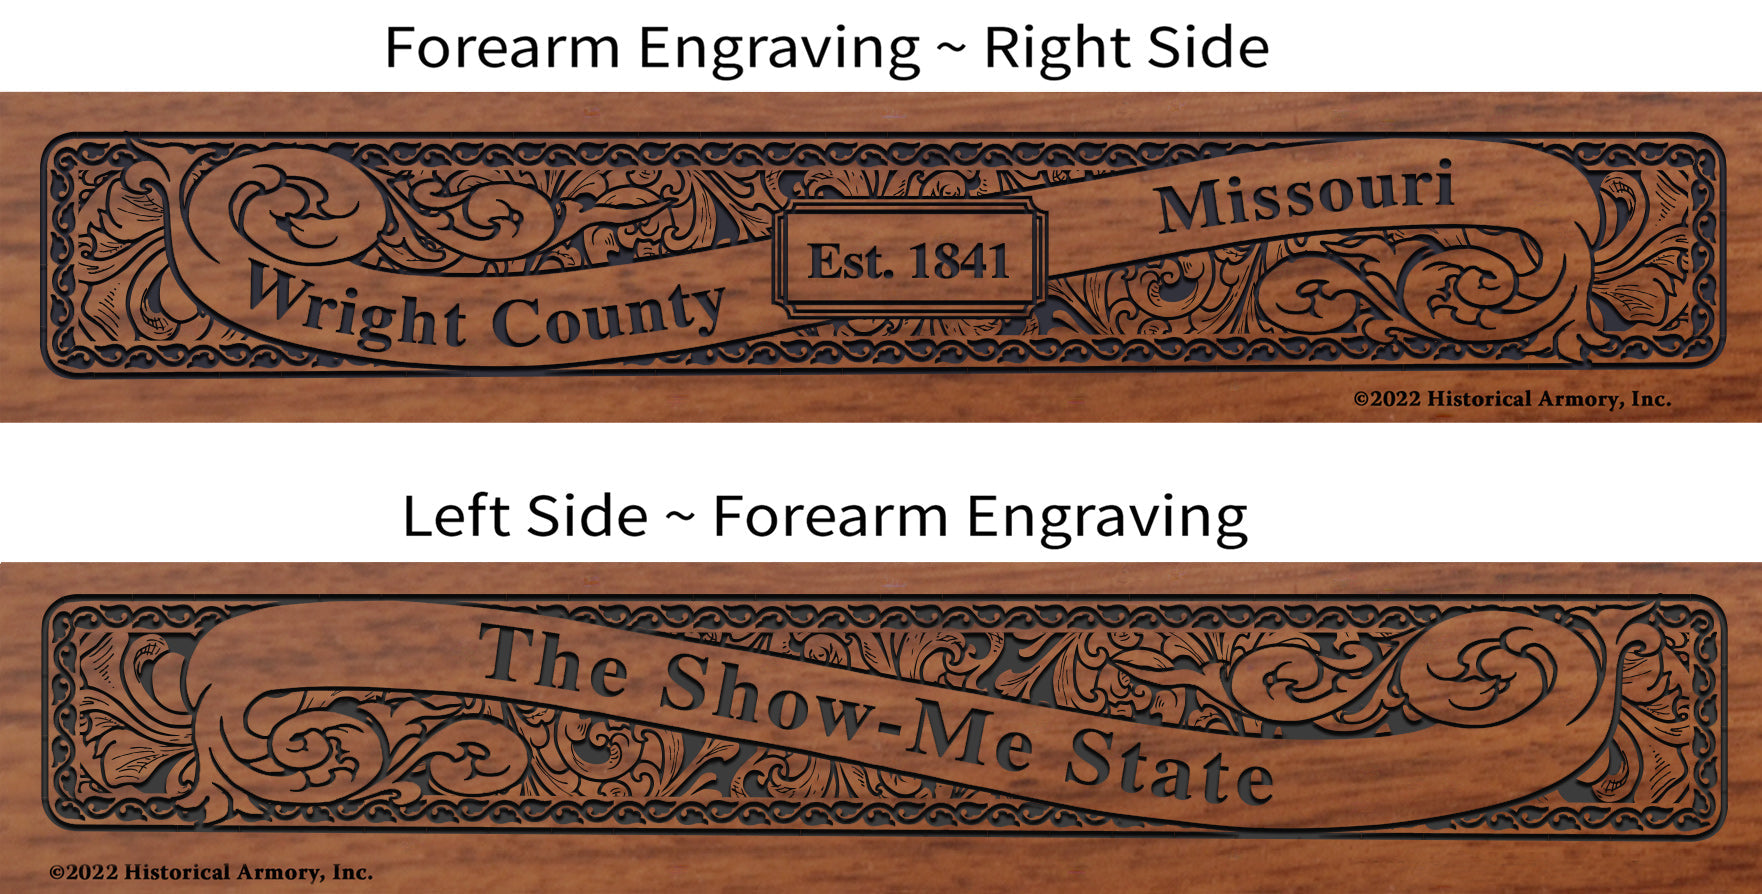 Wright County Missouri Engraved Rifle Forearm